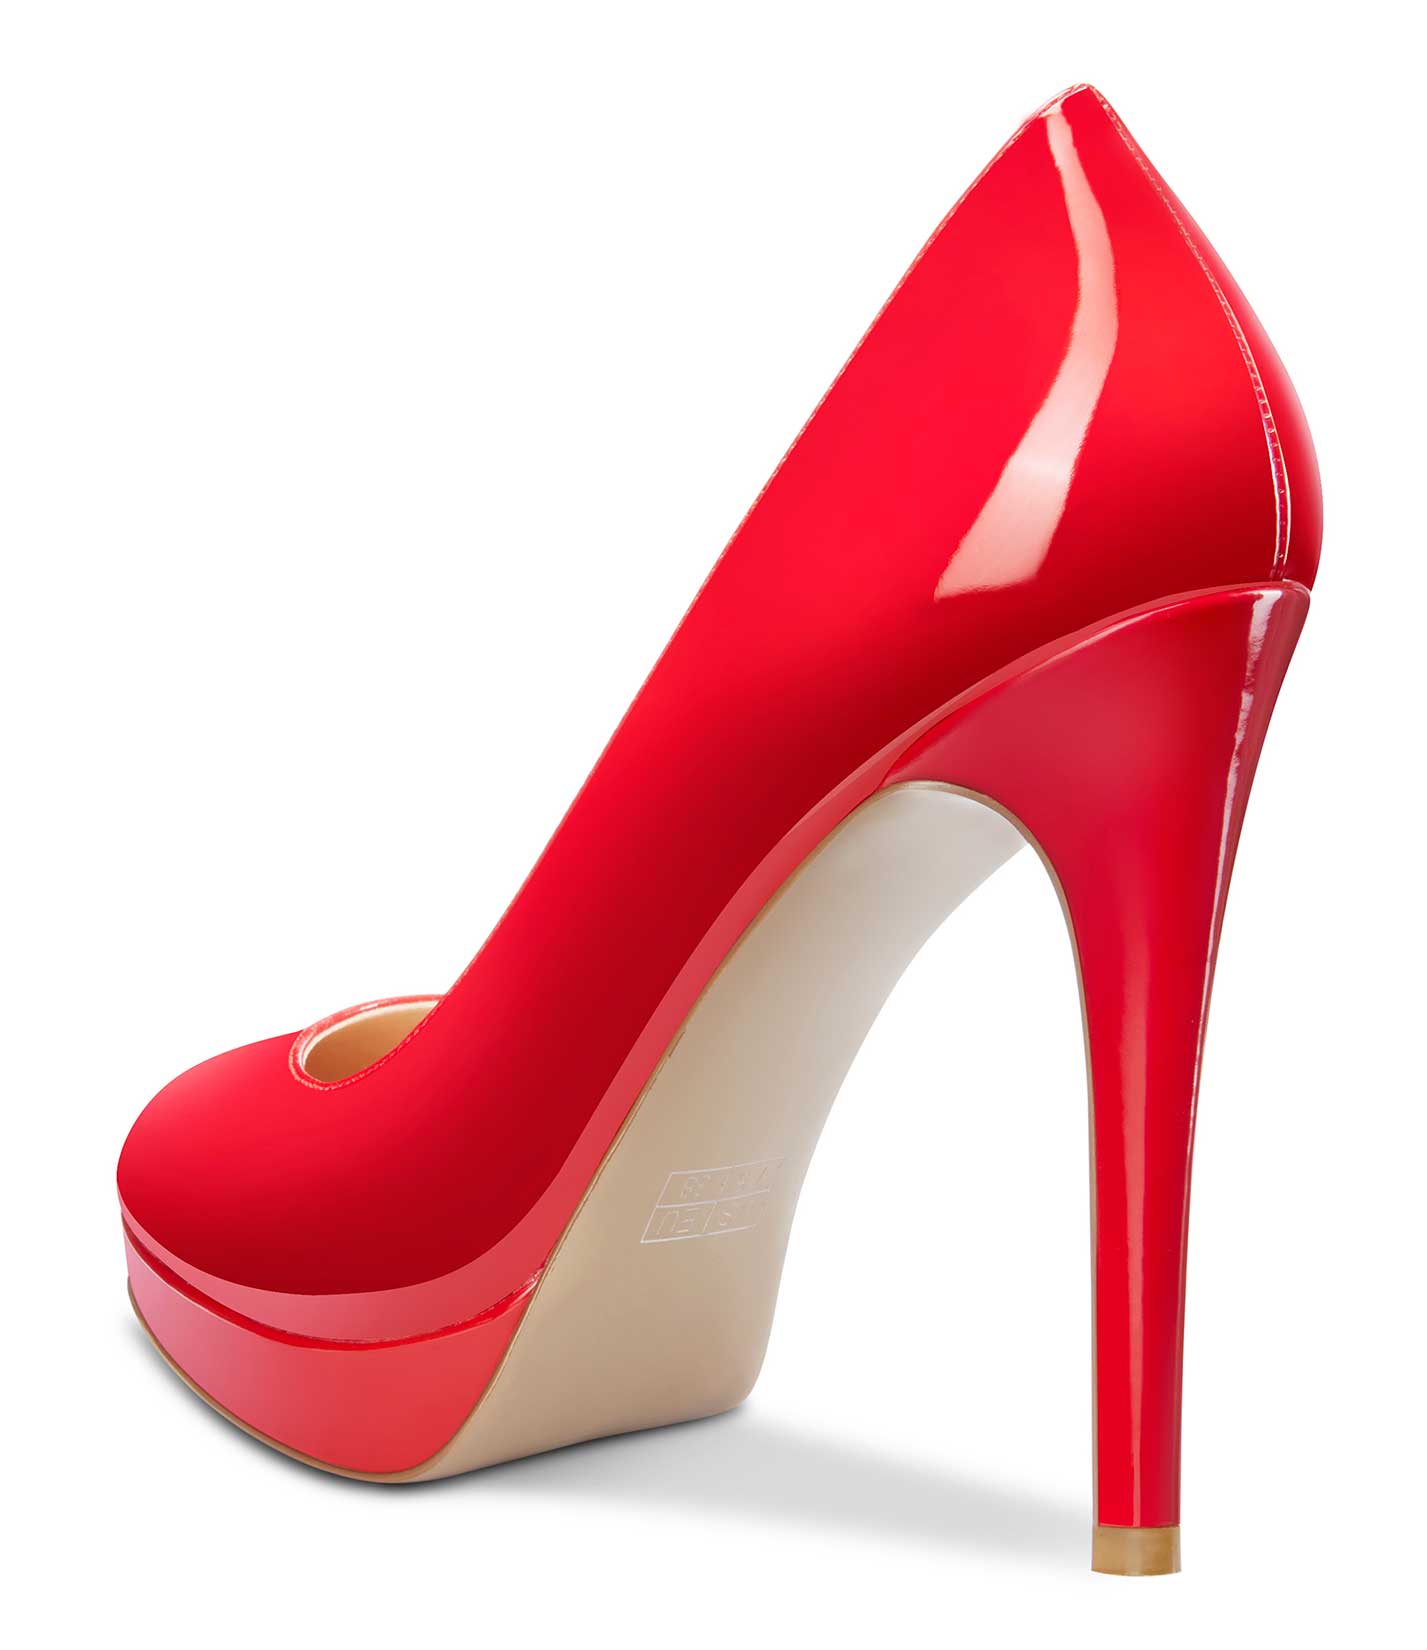 CASTAMERE Womens High Heels Platform Pumps Slip-on Stilettos 12CM Heel Office Dress Patent Shoes